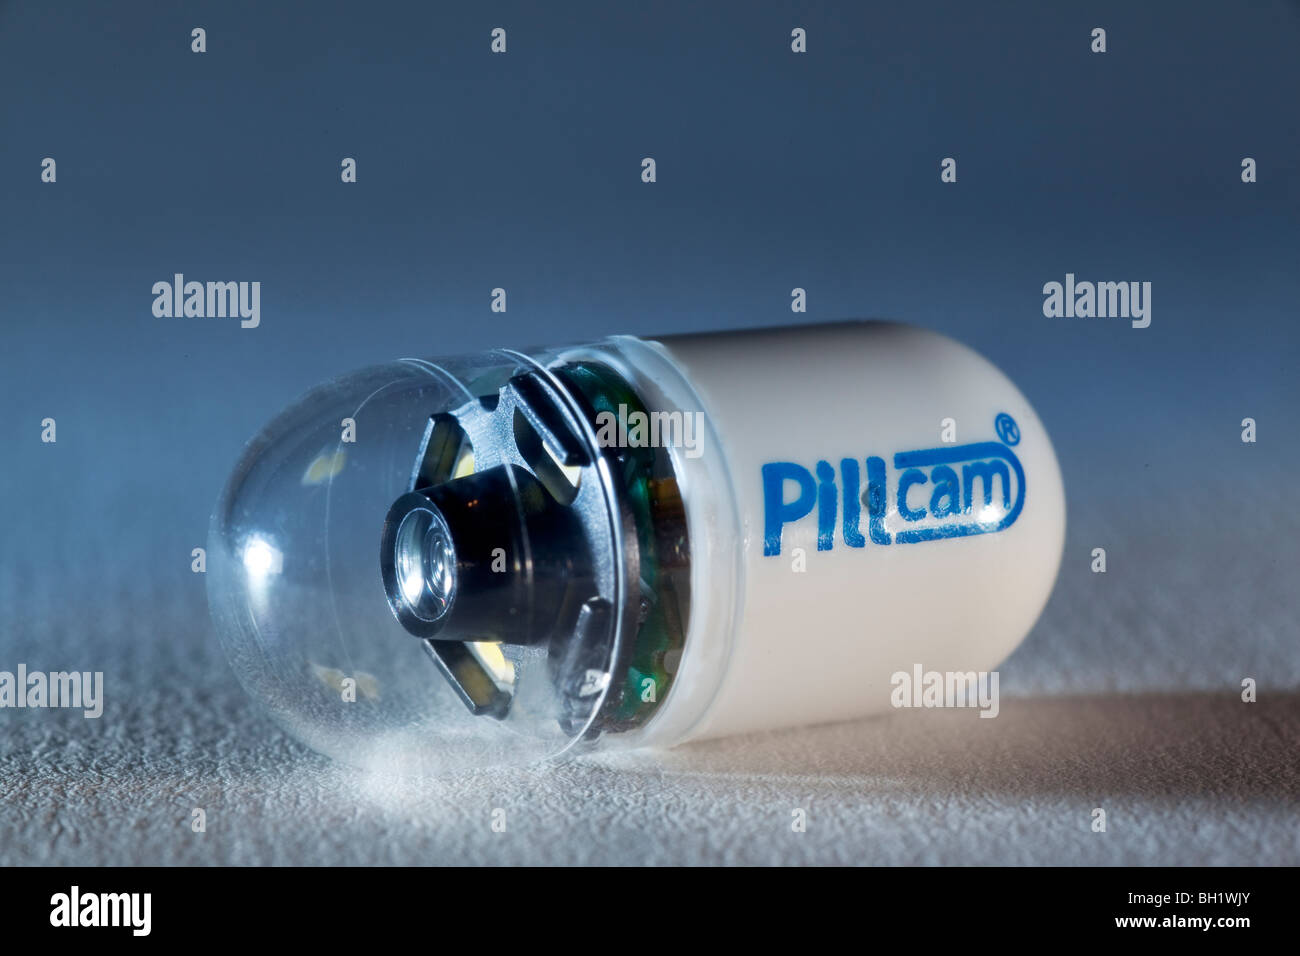 Pillcam capsule endoscopy miniature medical camera Stock Photo